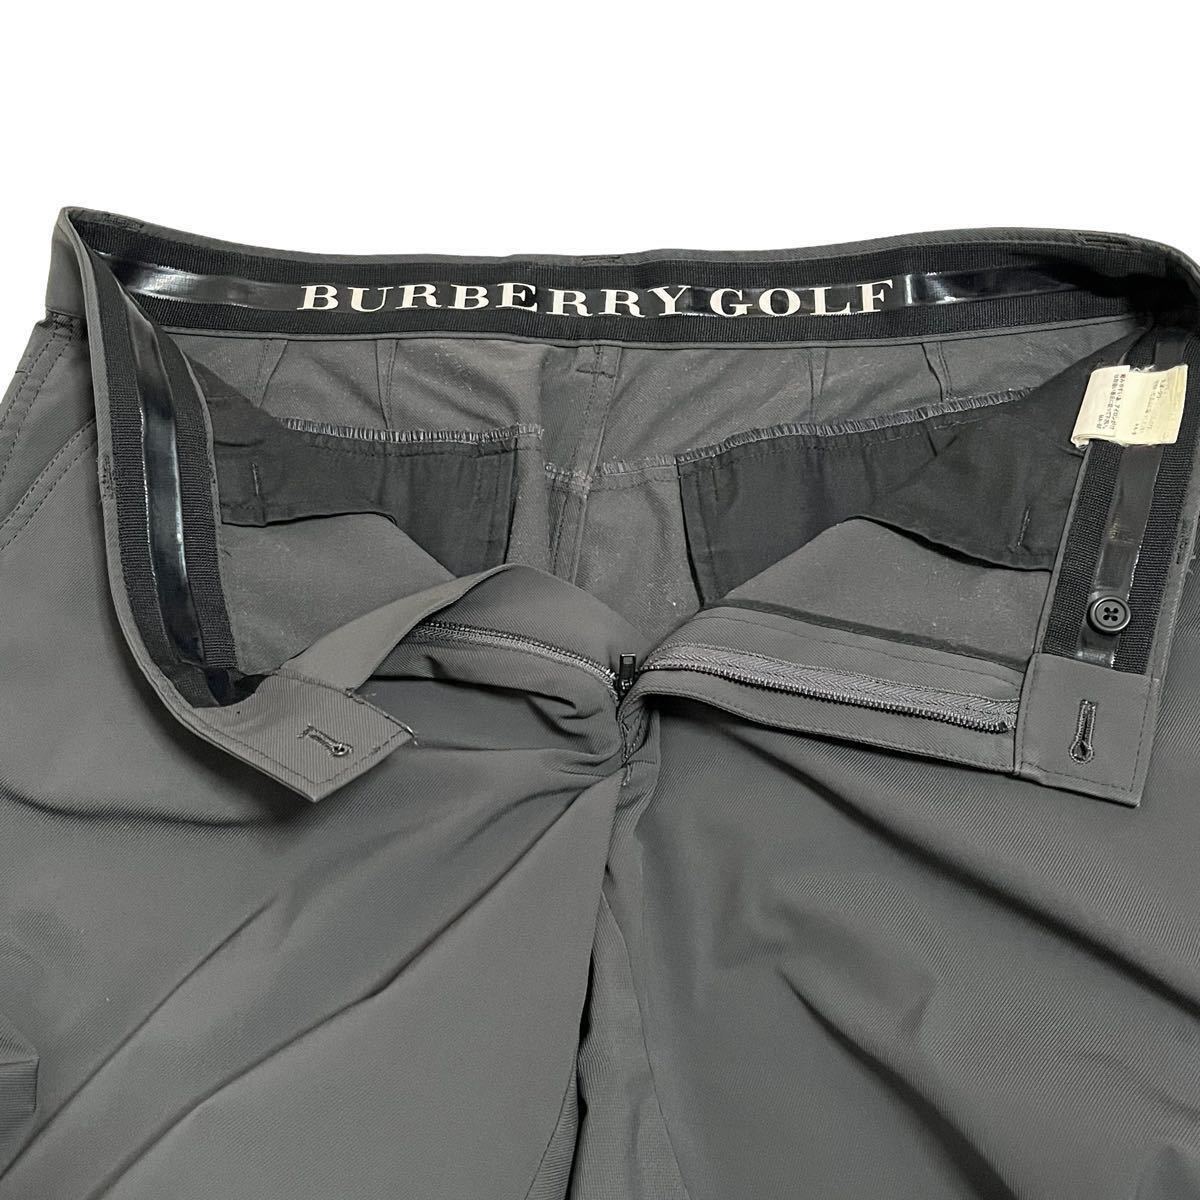 BURBERRY GOLF バーバリーゴルフ パンツ スラックス メンズ Ｗ91 グレー 三陽商会 ロゴワッペン